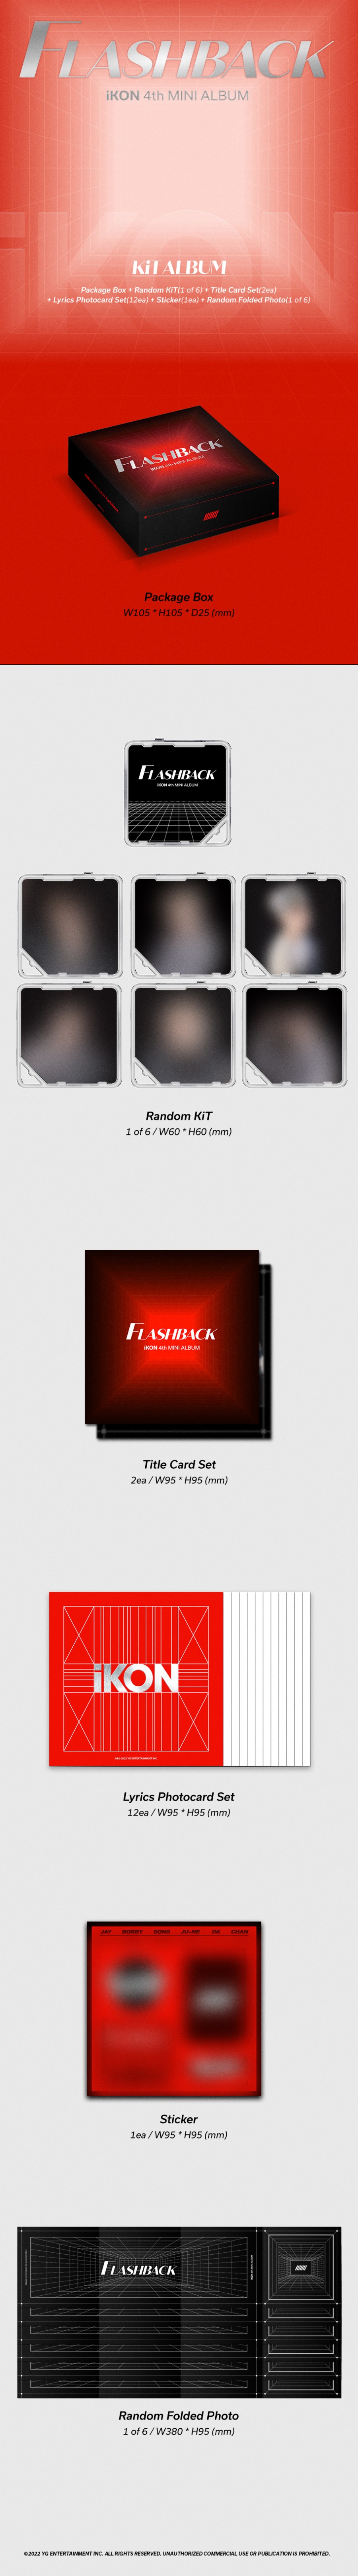 iKON(아이콘) - 4th MINI ALBUM FLASHBACK [KiT Album]